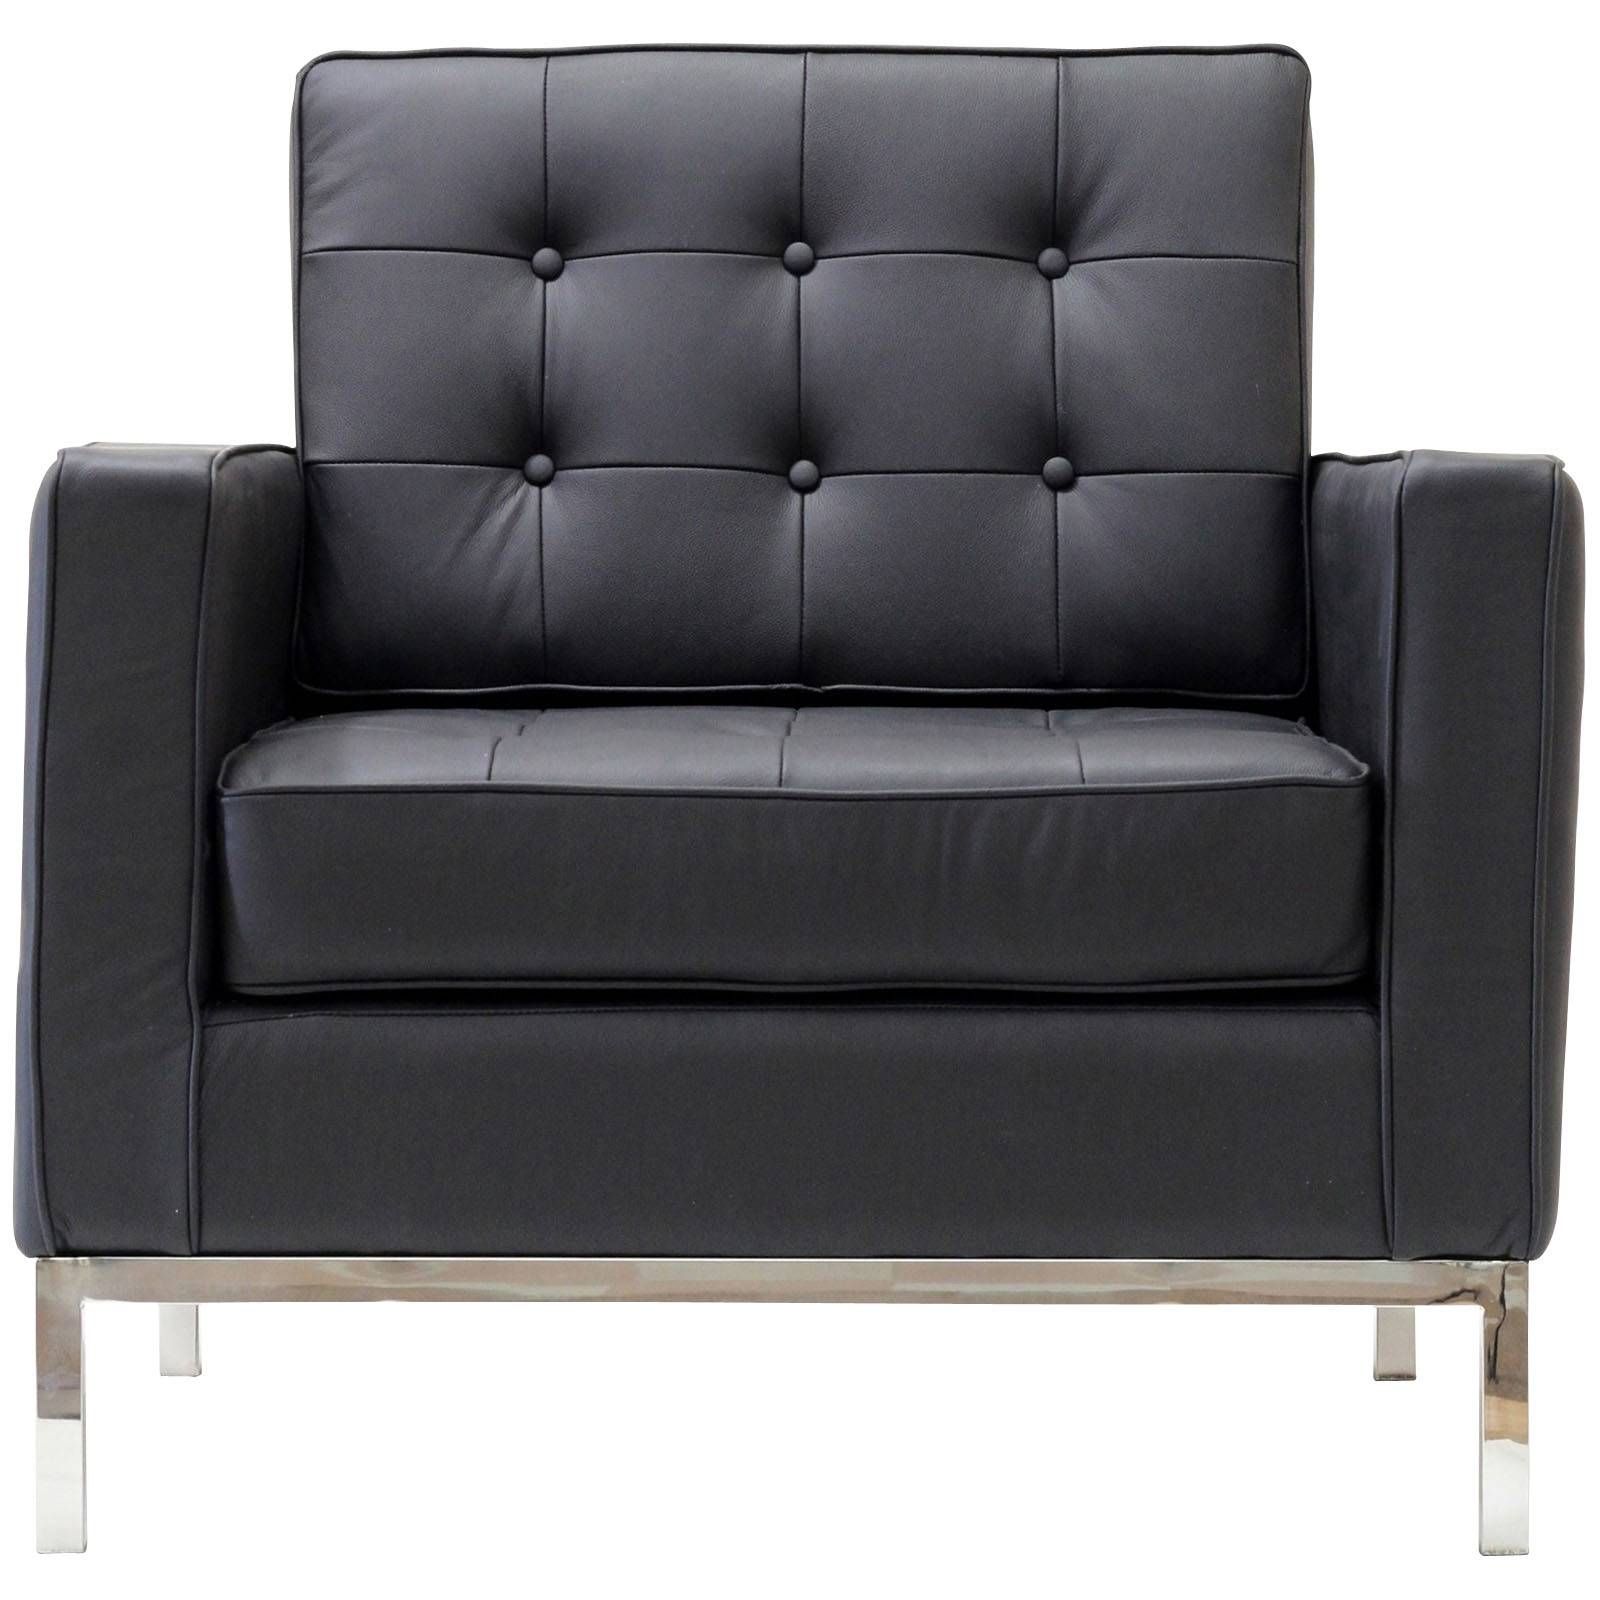 Chair Leather Chair Sofa And Covers Eei 183 B Sofa And Chair Sofa Within Sofa With Chairs (View 12 of 15)